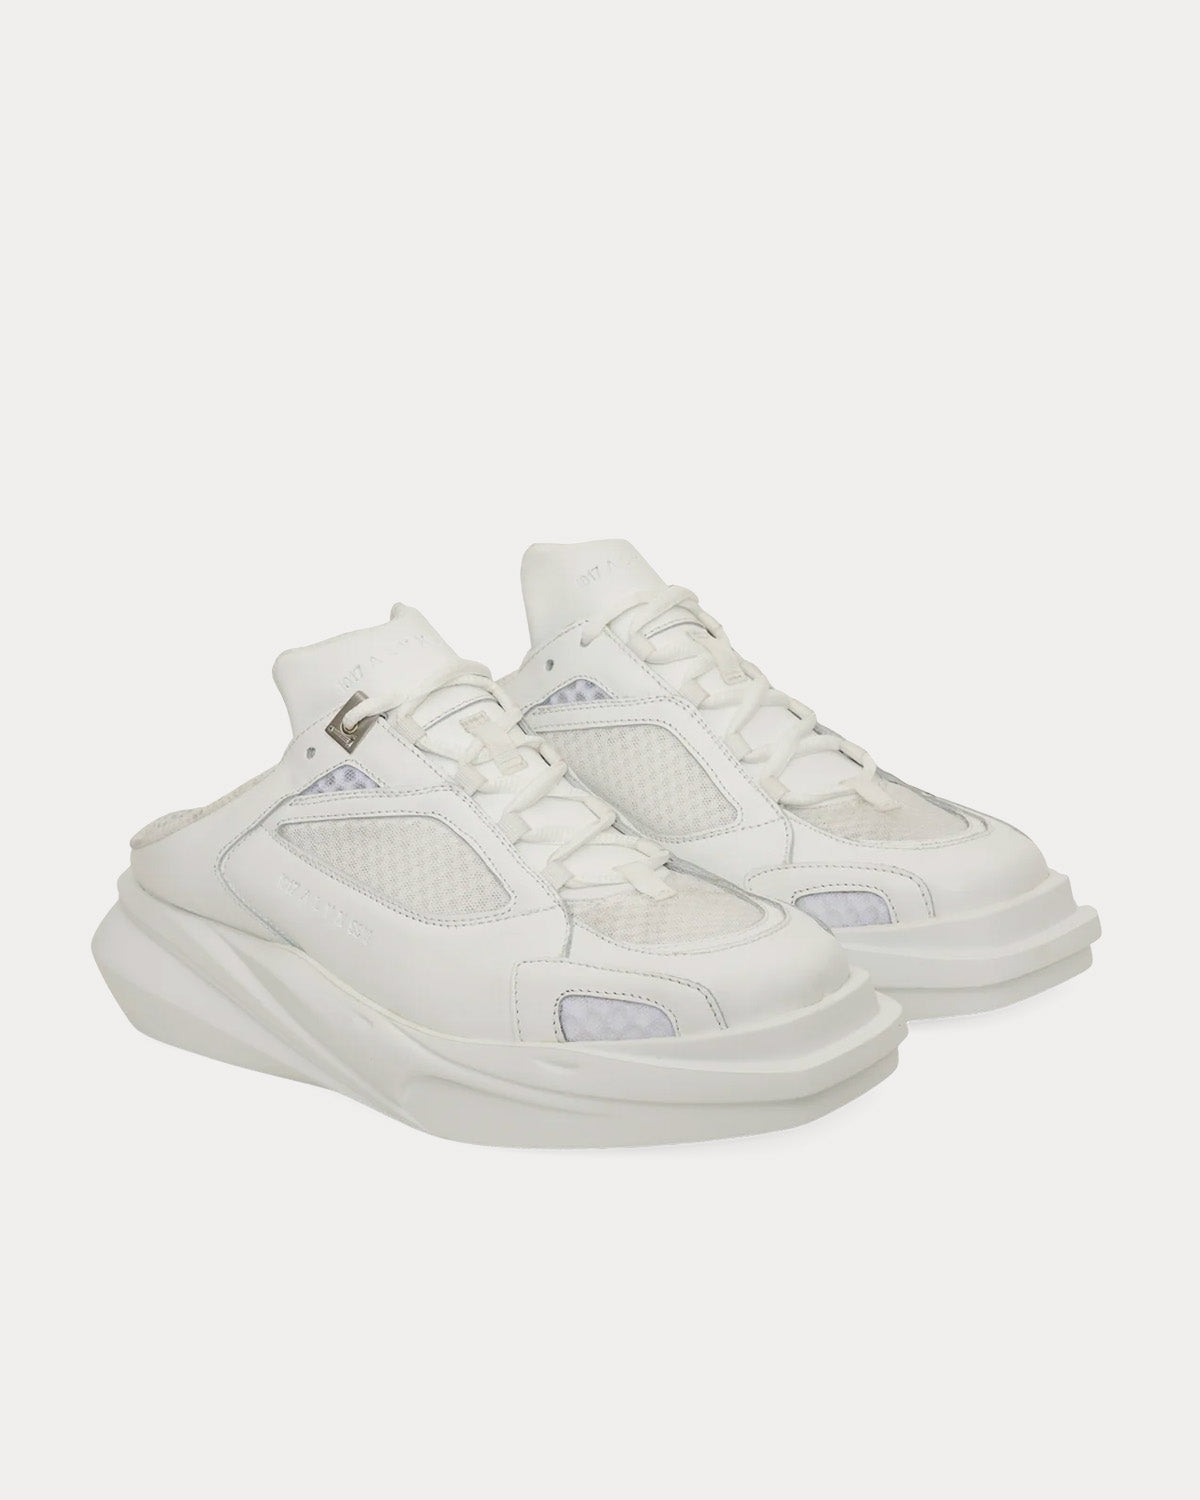 1017 ALYX 9SM - Mono Hiking Mule White Low Top Sneakers